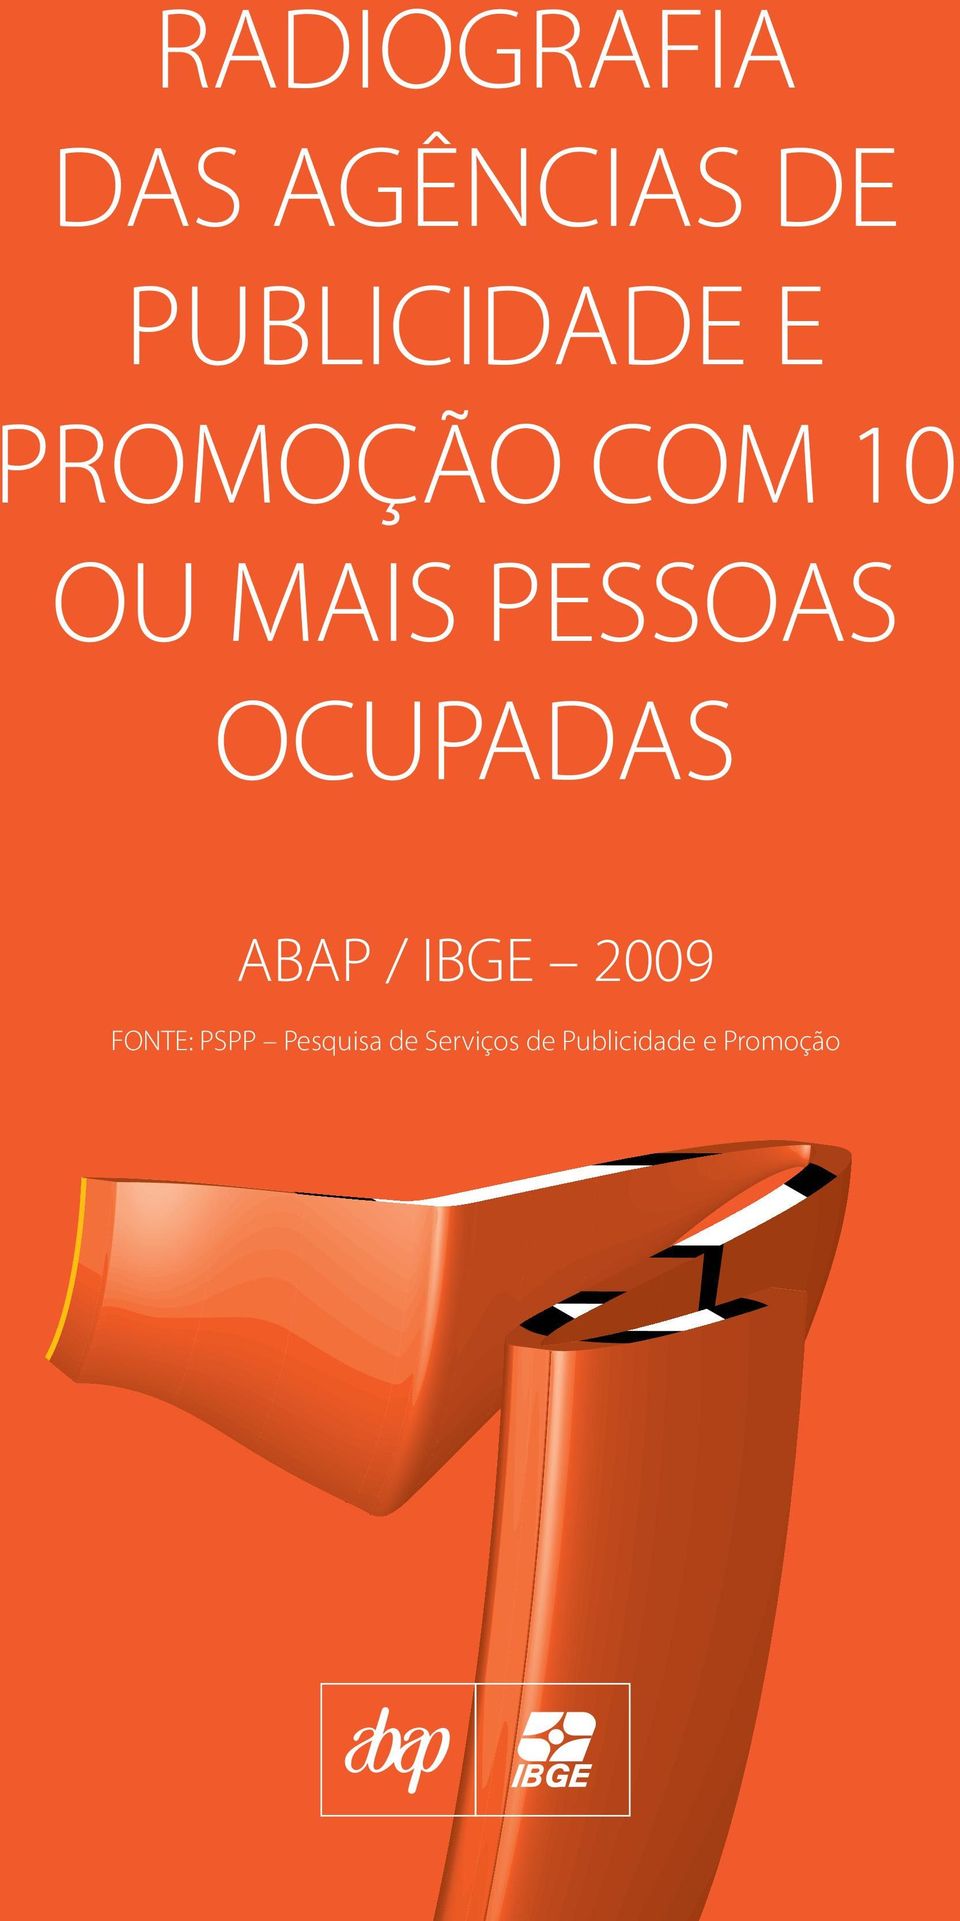 OCUPADAS ABAP / IBGE 2009 FONTE: PSPP